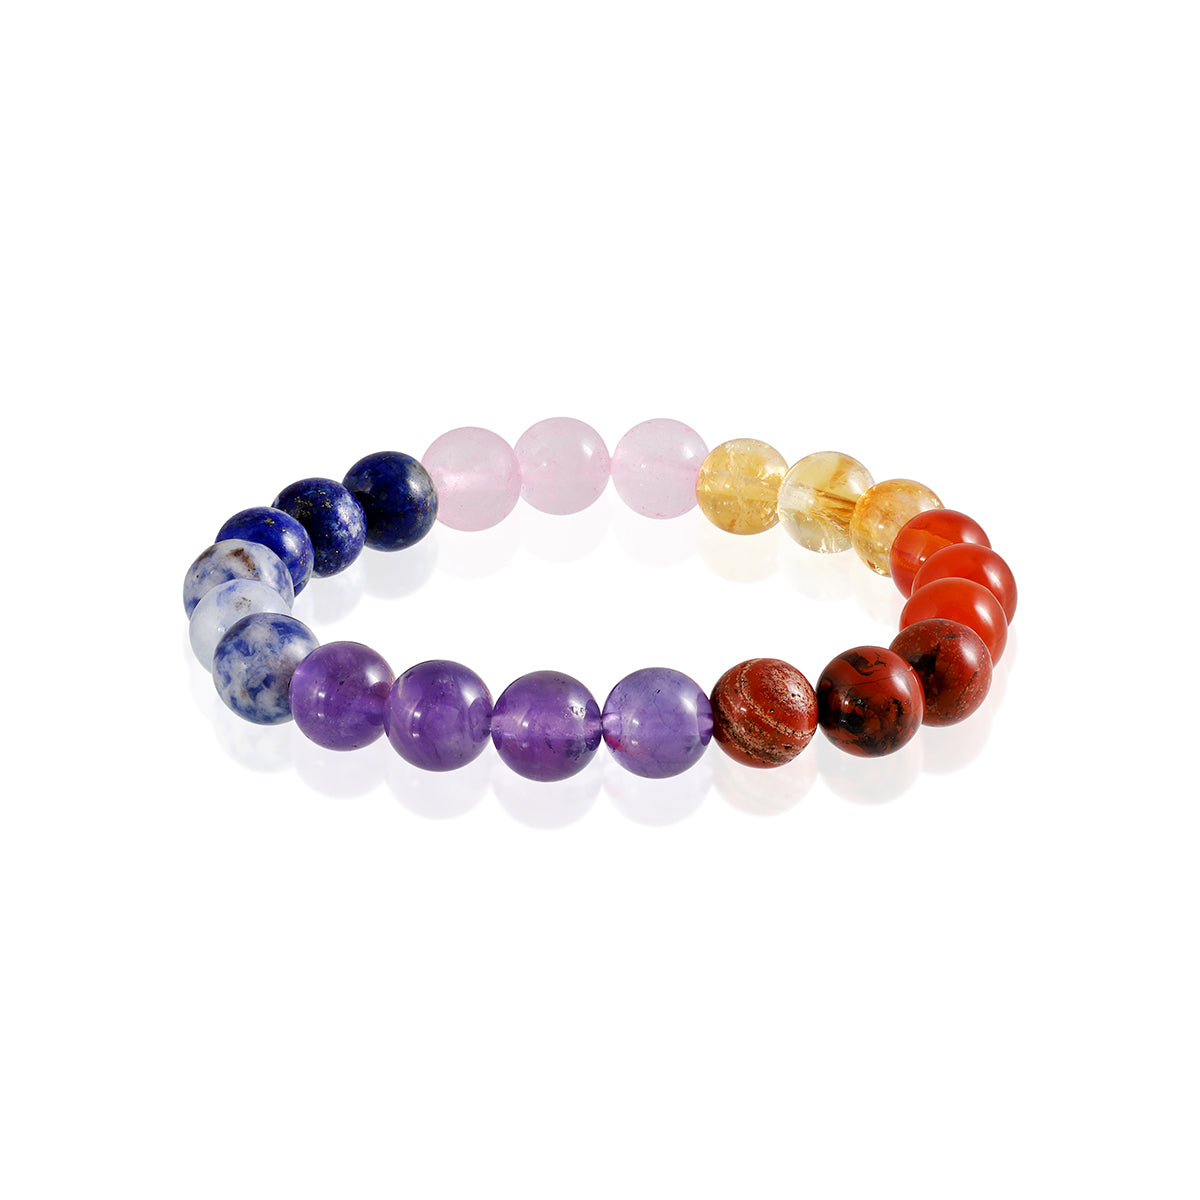 7 Chakra Gemstone Stretch Bracelet - 8 MM Beads